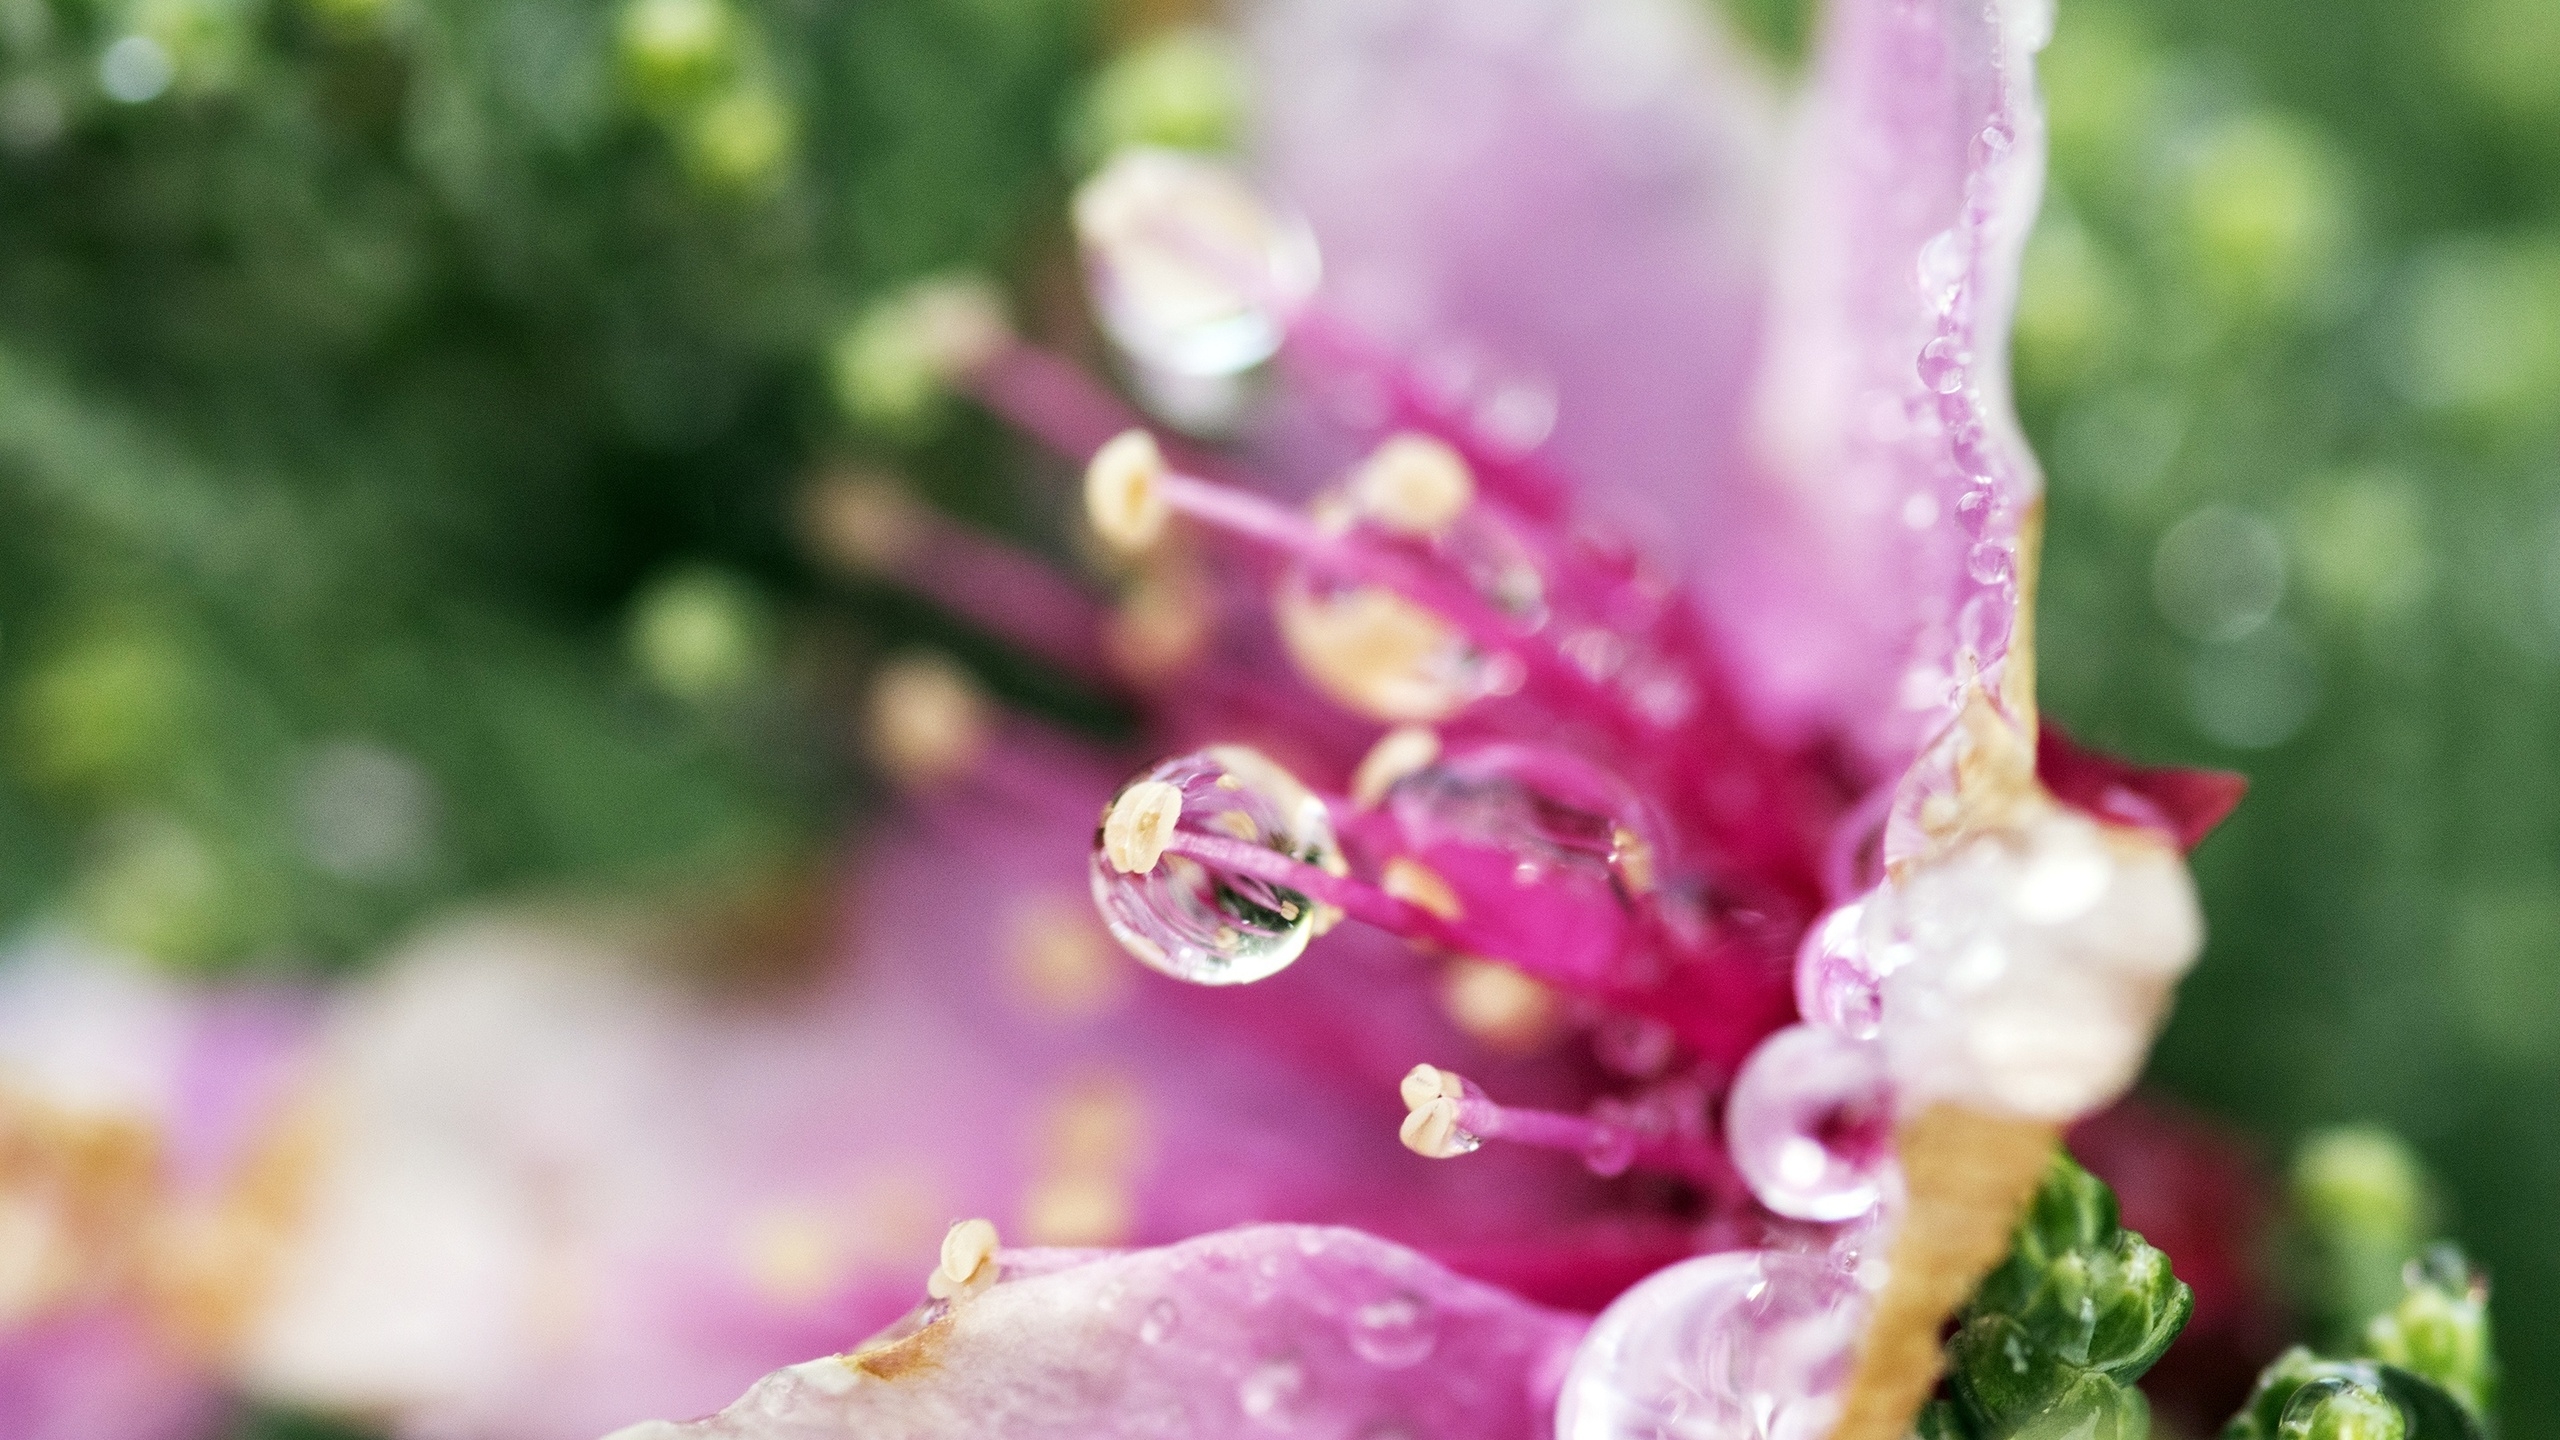 Pink Flower Droplets for 2560x1440 HDTV resolution